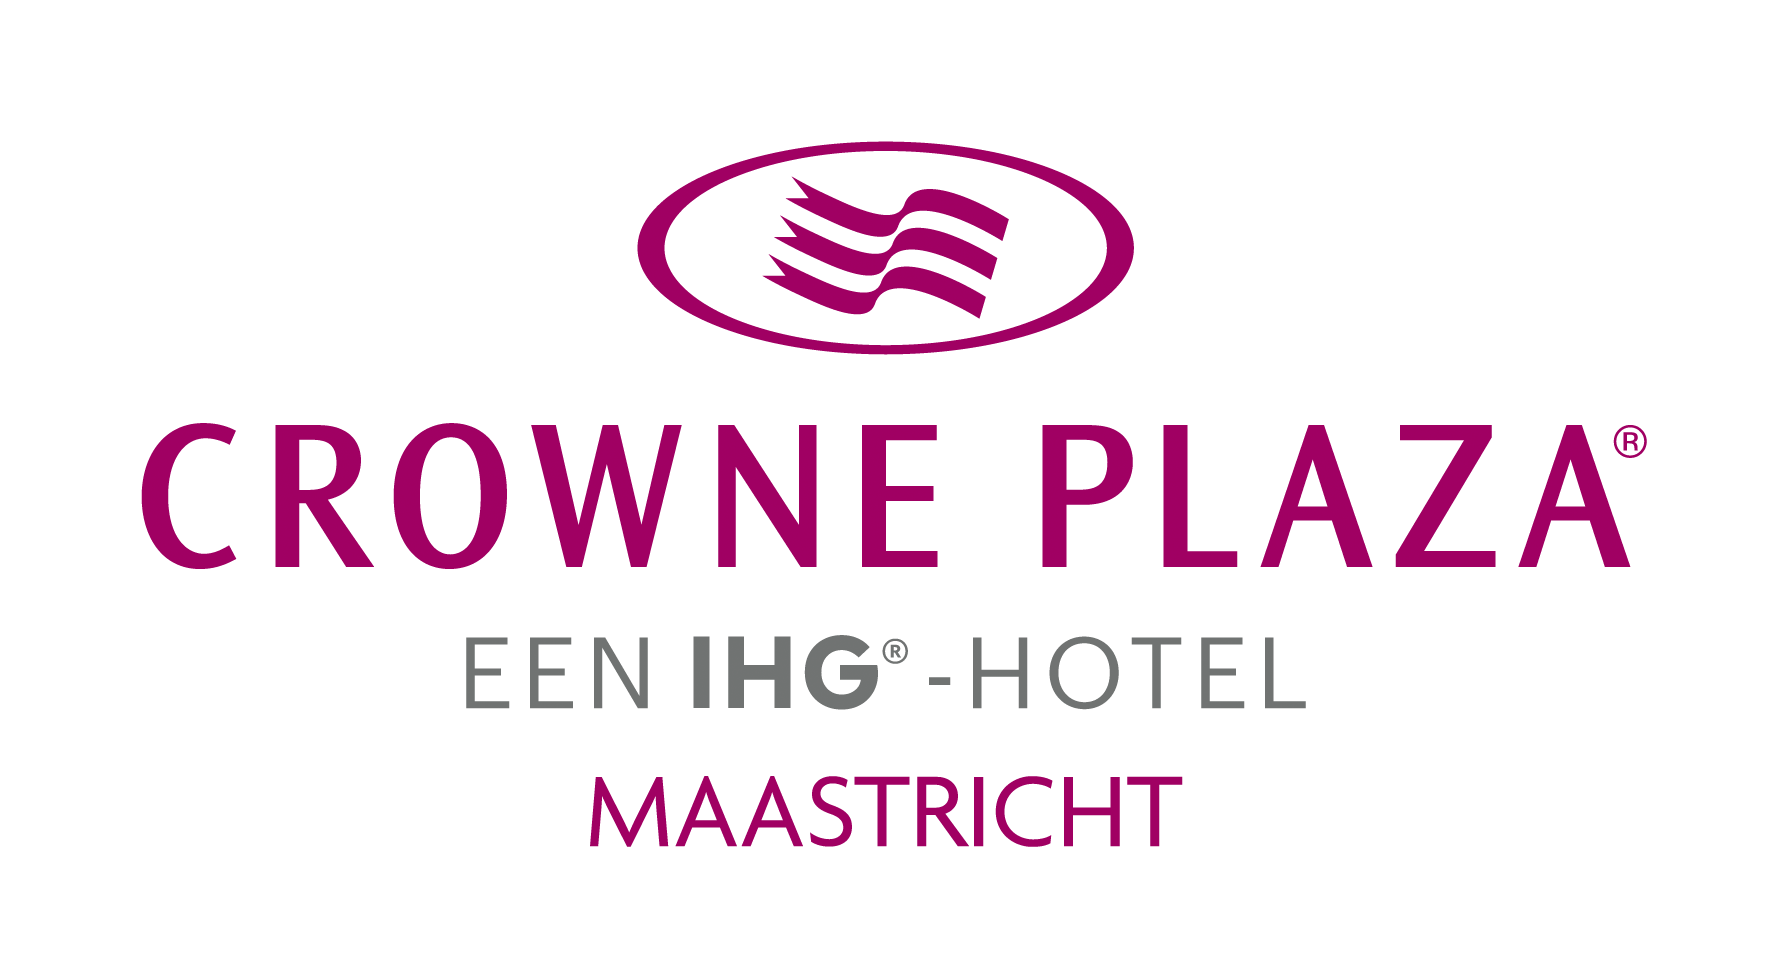 Logo van Crowne Plaza hotel